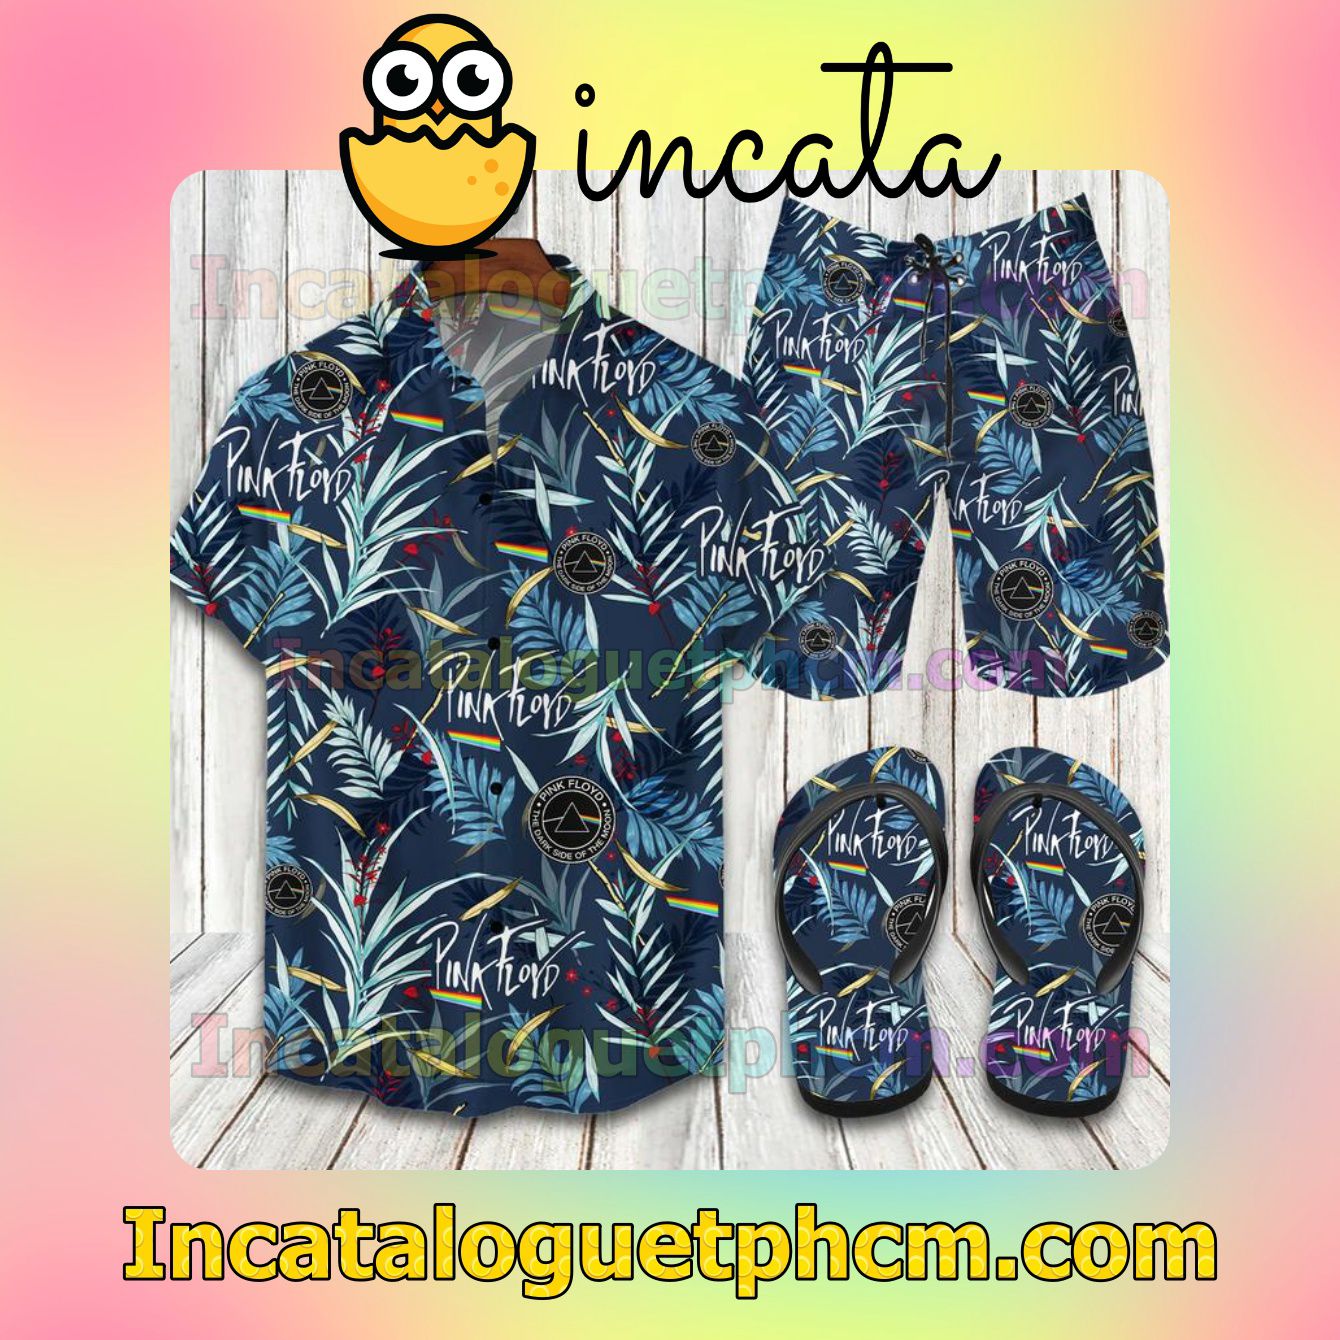 Pink Floyd Tropical Aloha Shirt And Shorts